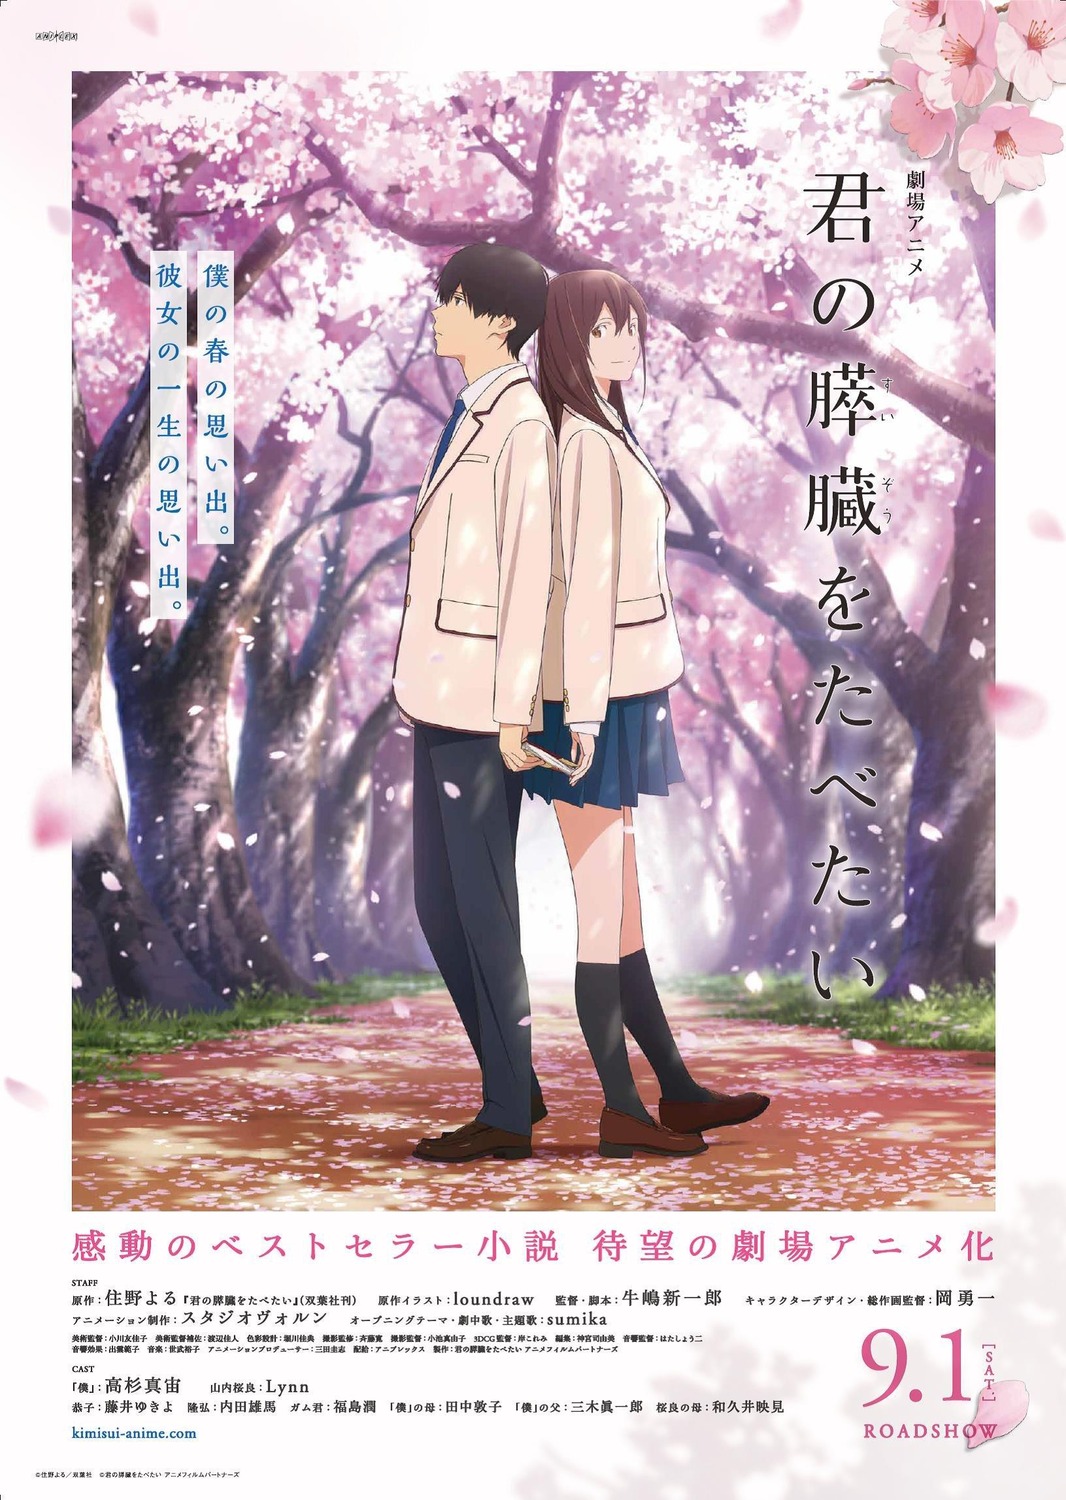 Extra Large Movie Poster Image for Kimi no suizô o tabetai 